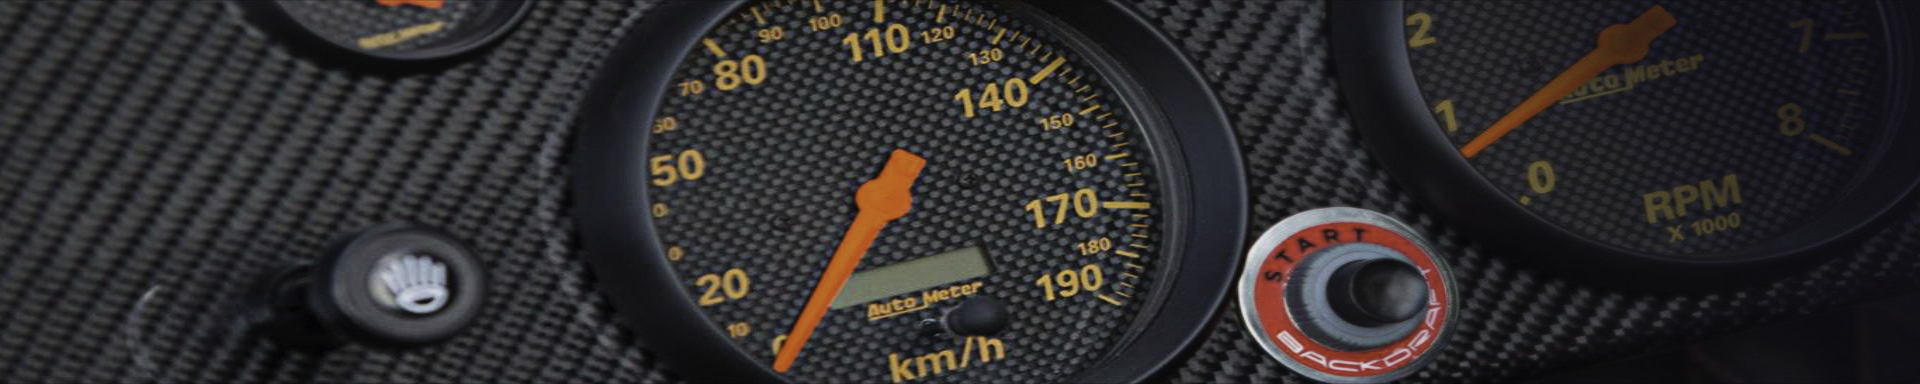 Speedometers | GarageAndFab.com | Munro Industries gf-100103050515